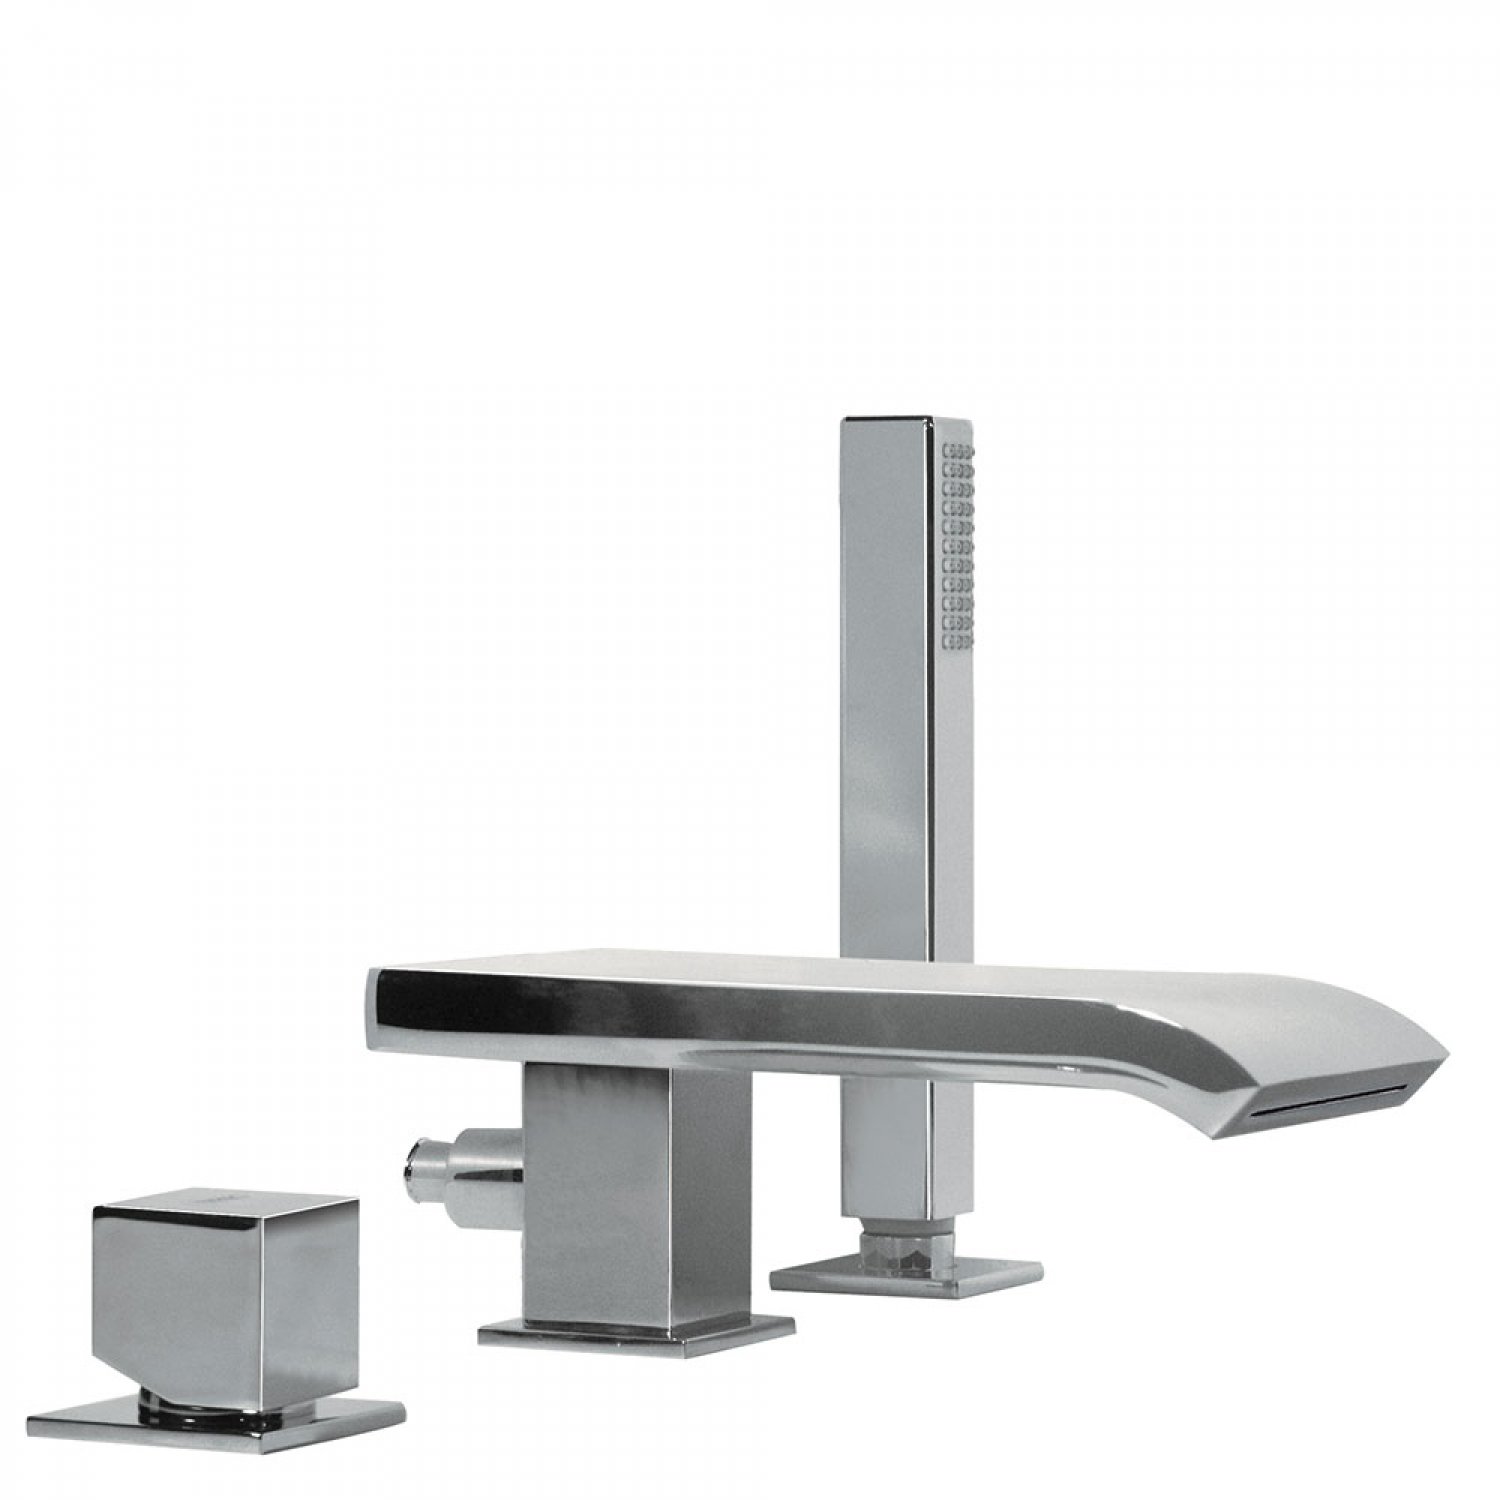 http://desidea.hu/wp-content/uploads/2019/07/Bath-shower-single-lever-tap-for-bracket-shelf-10716102.jpg